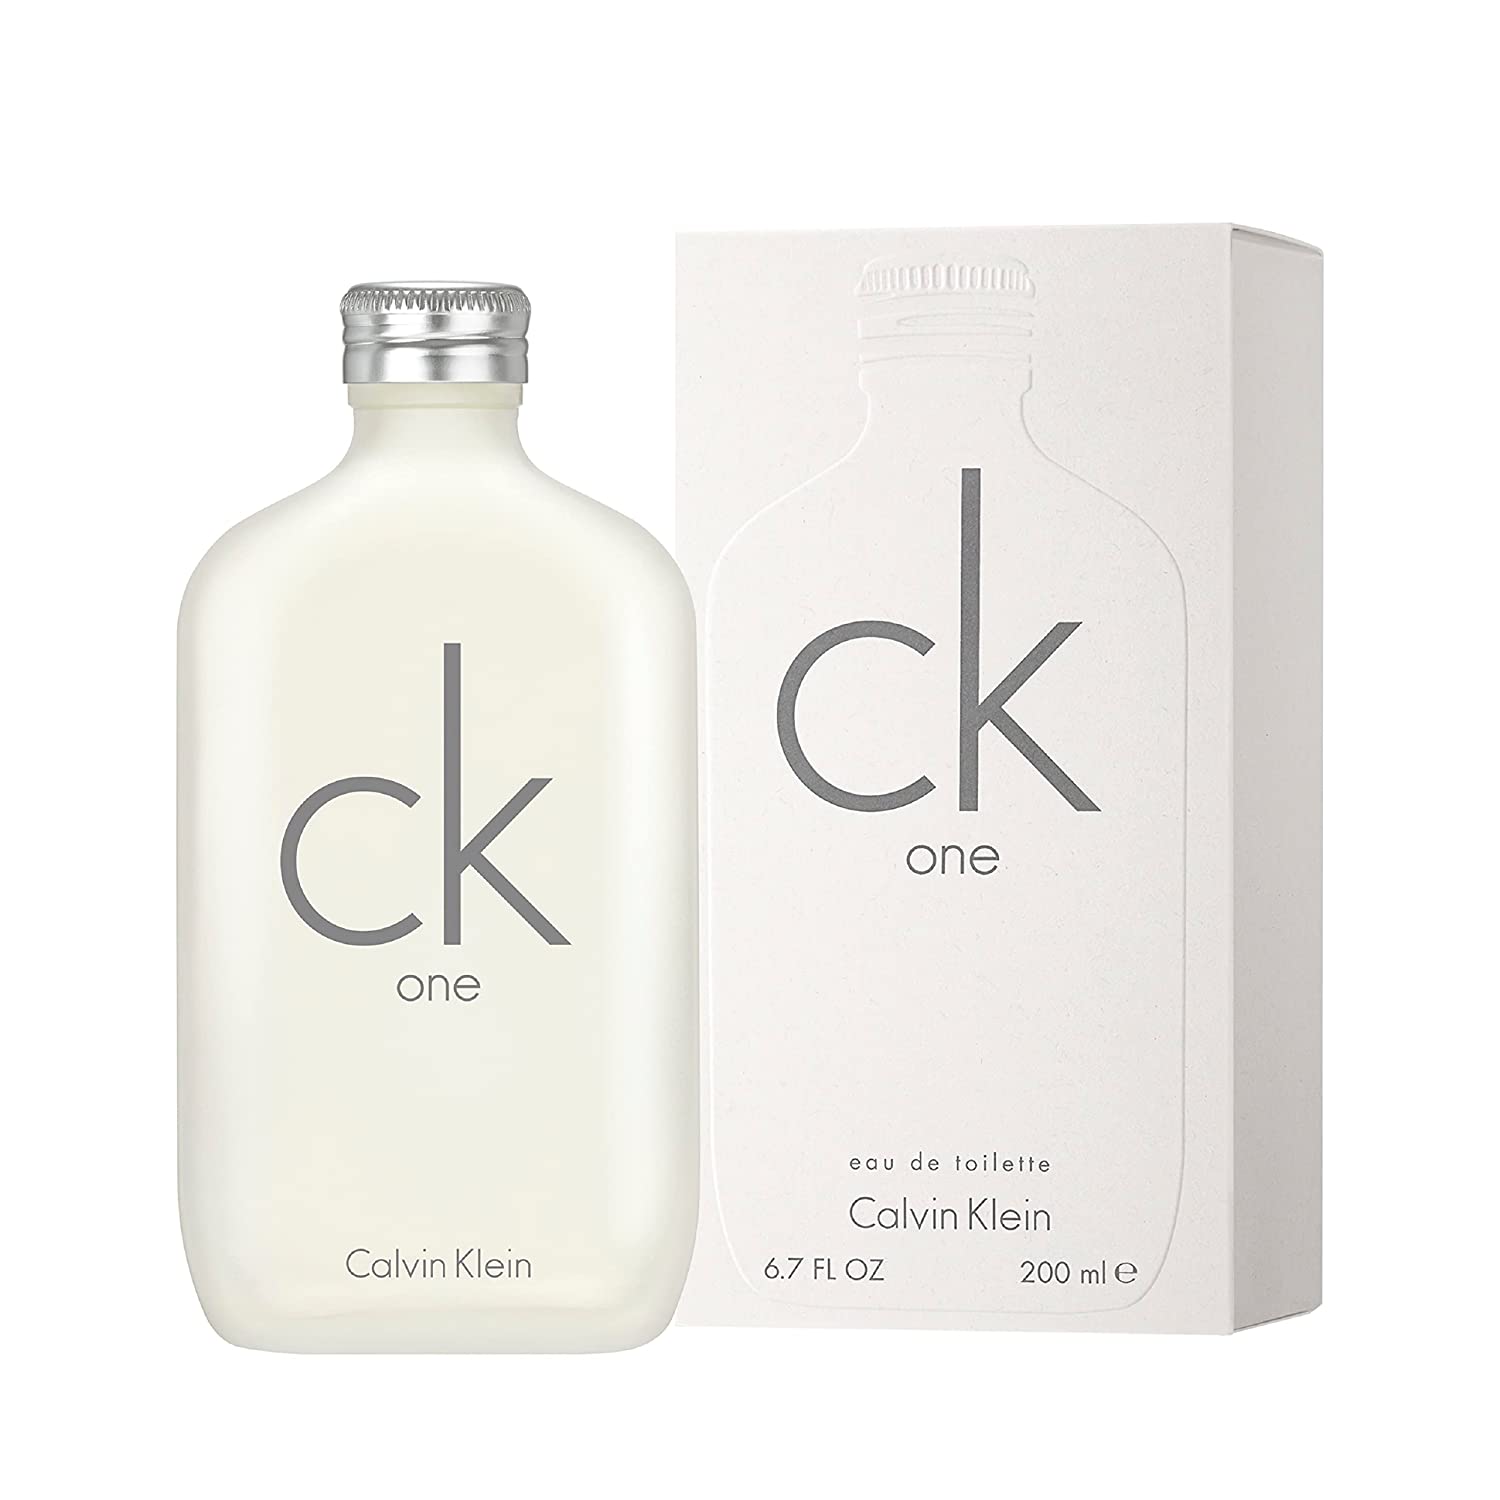 Calvin Klein ck one Eau de Toilette - 6.7 Fl.Oz (200ml)